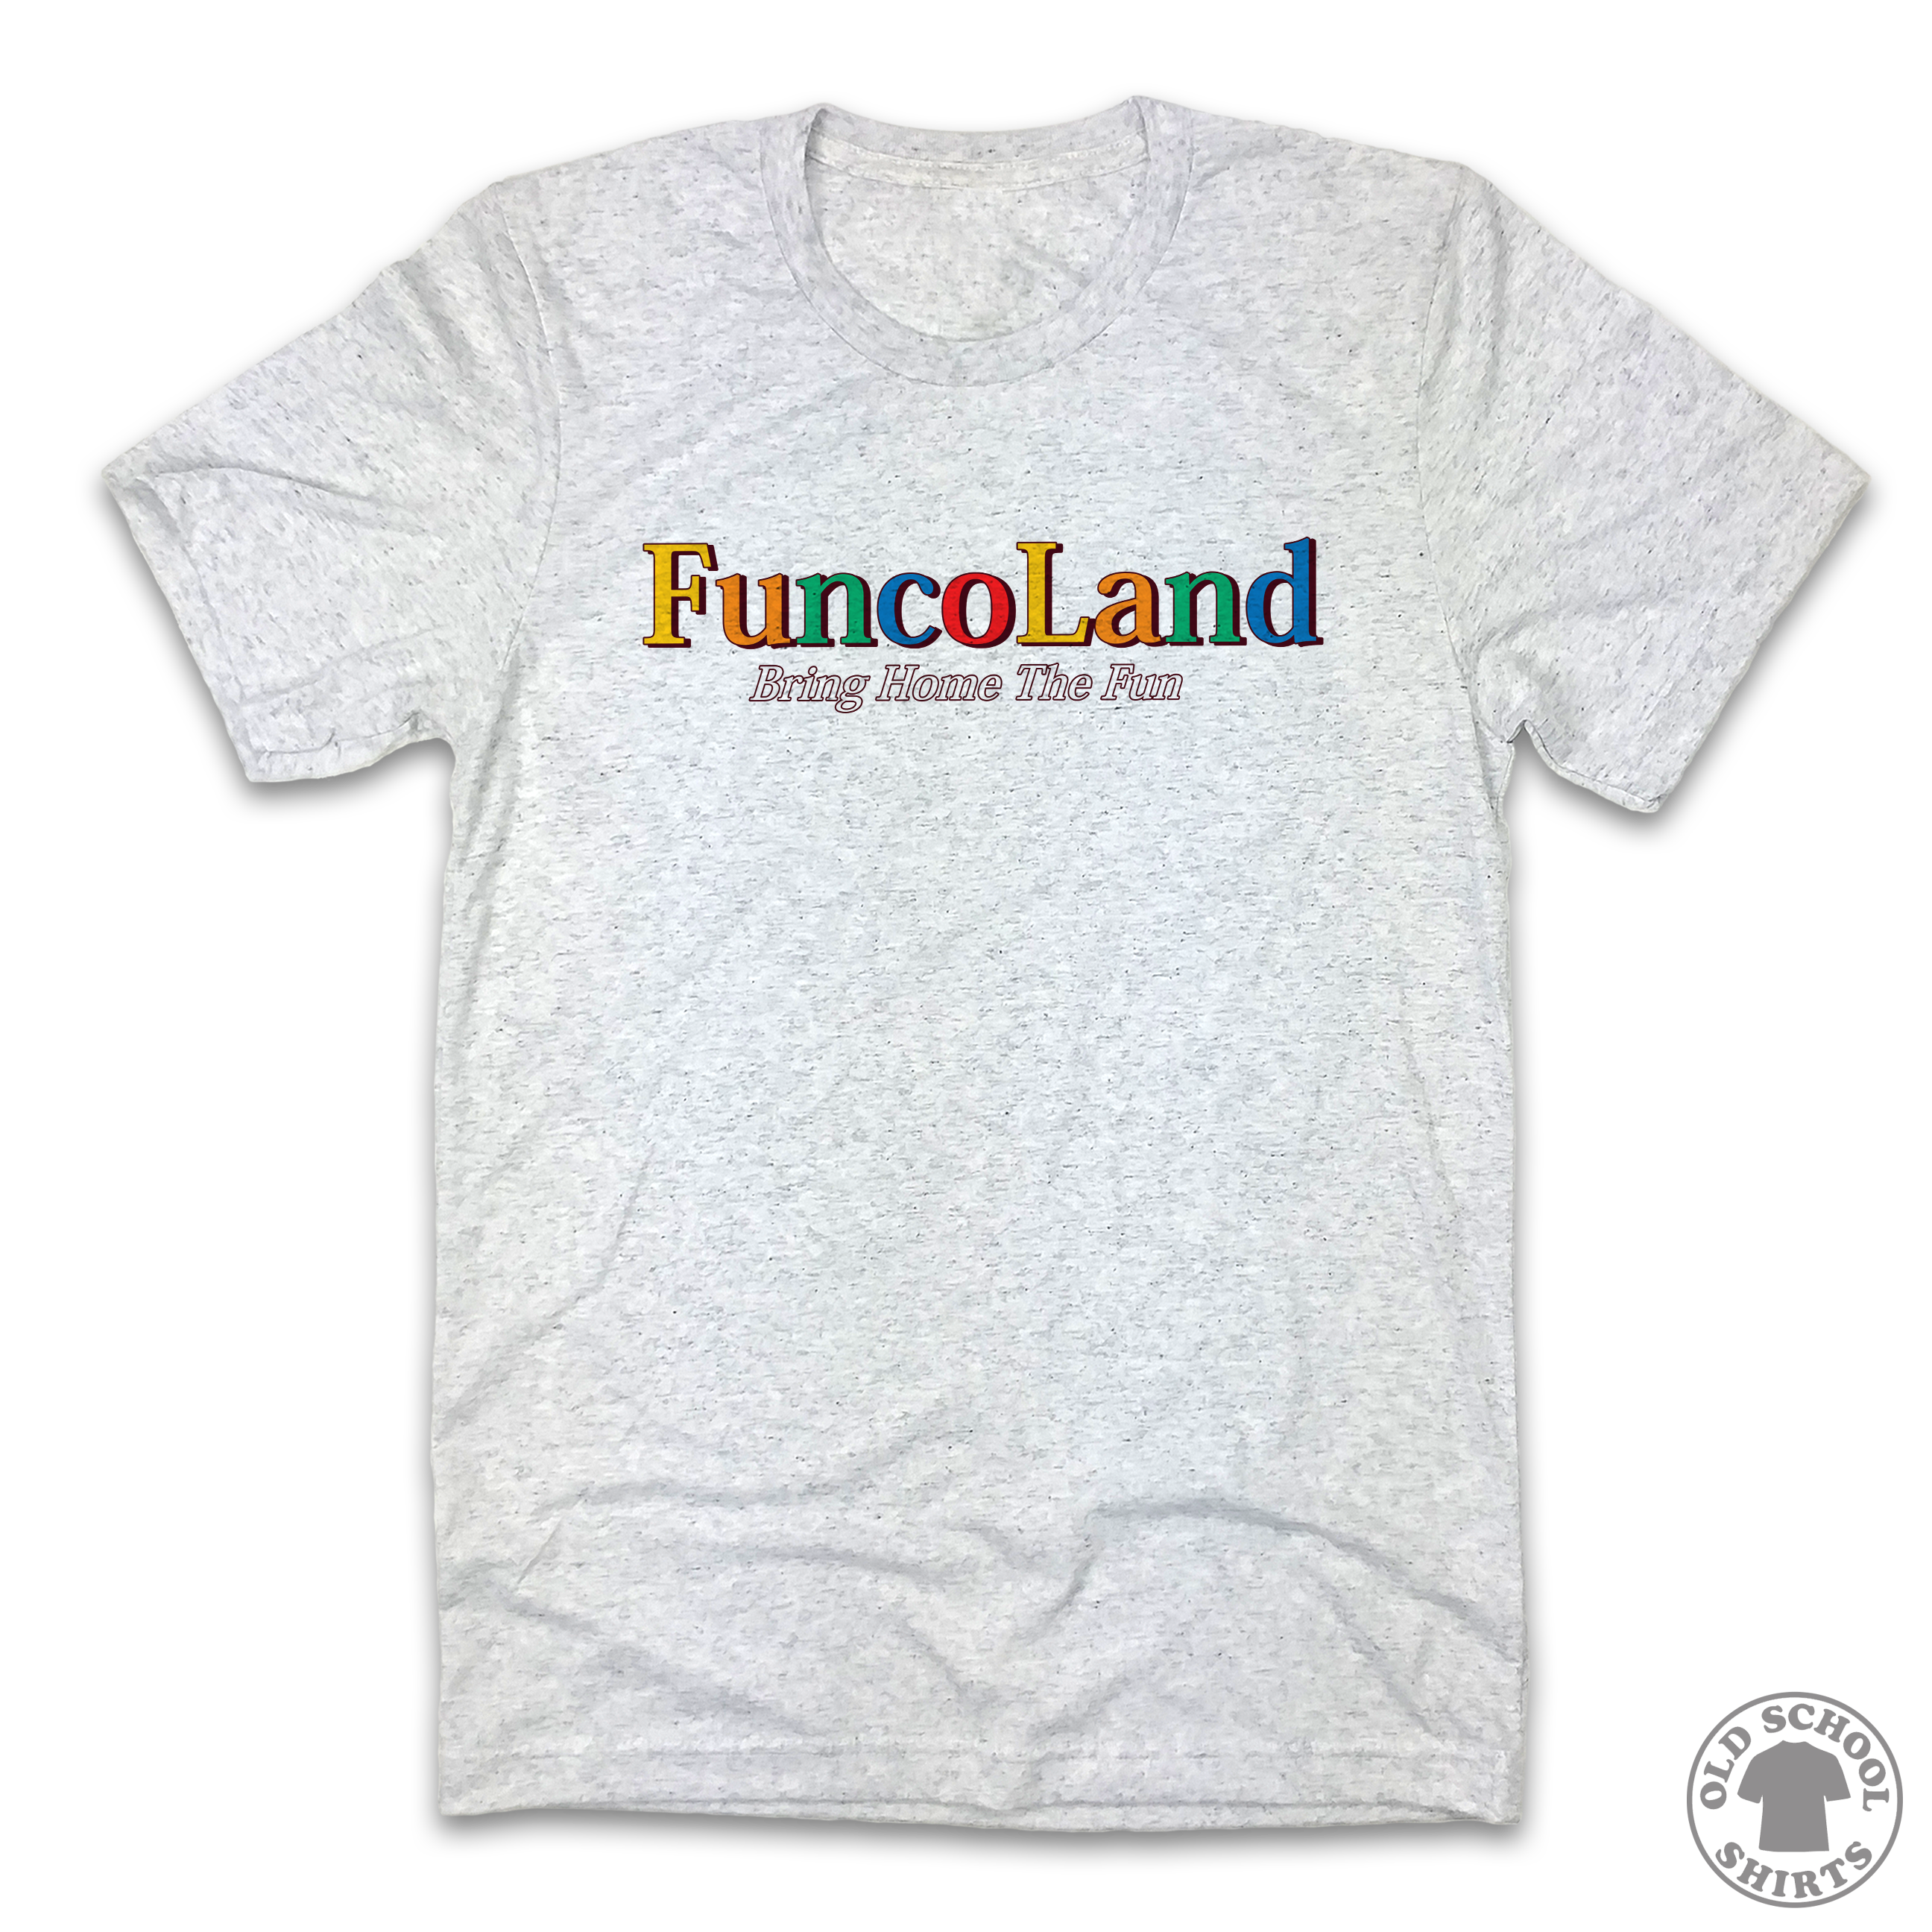 FuncoLand - Old School Shirts- Retro Sports T Shirts